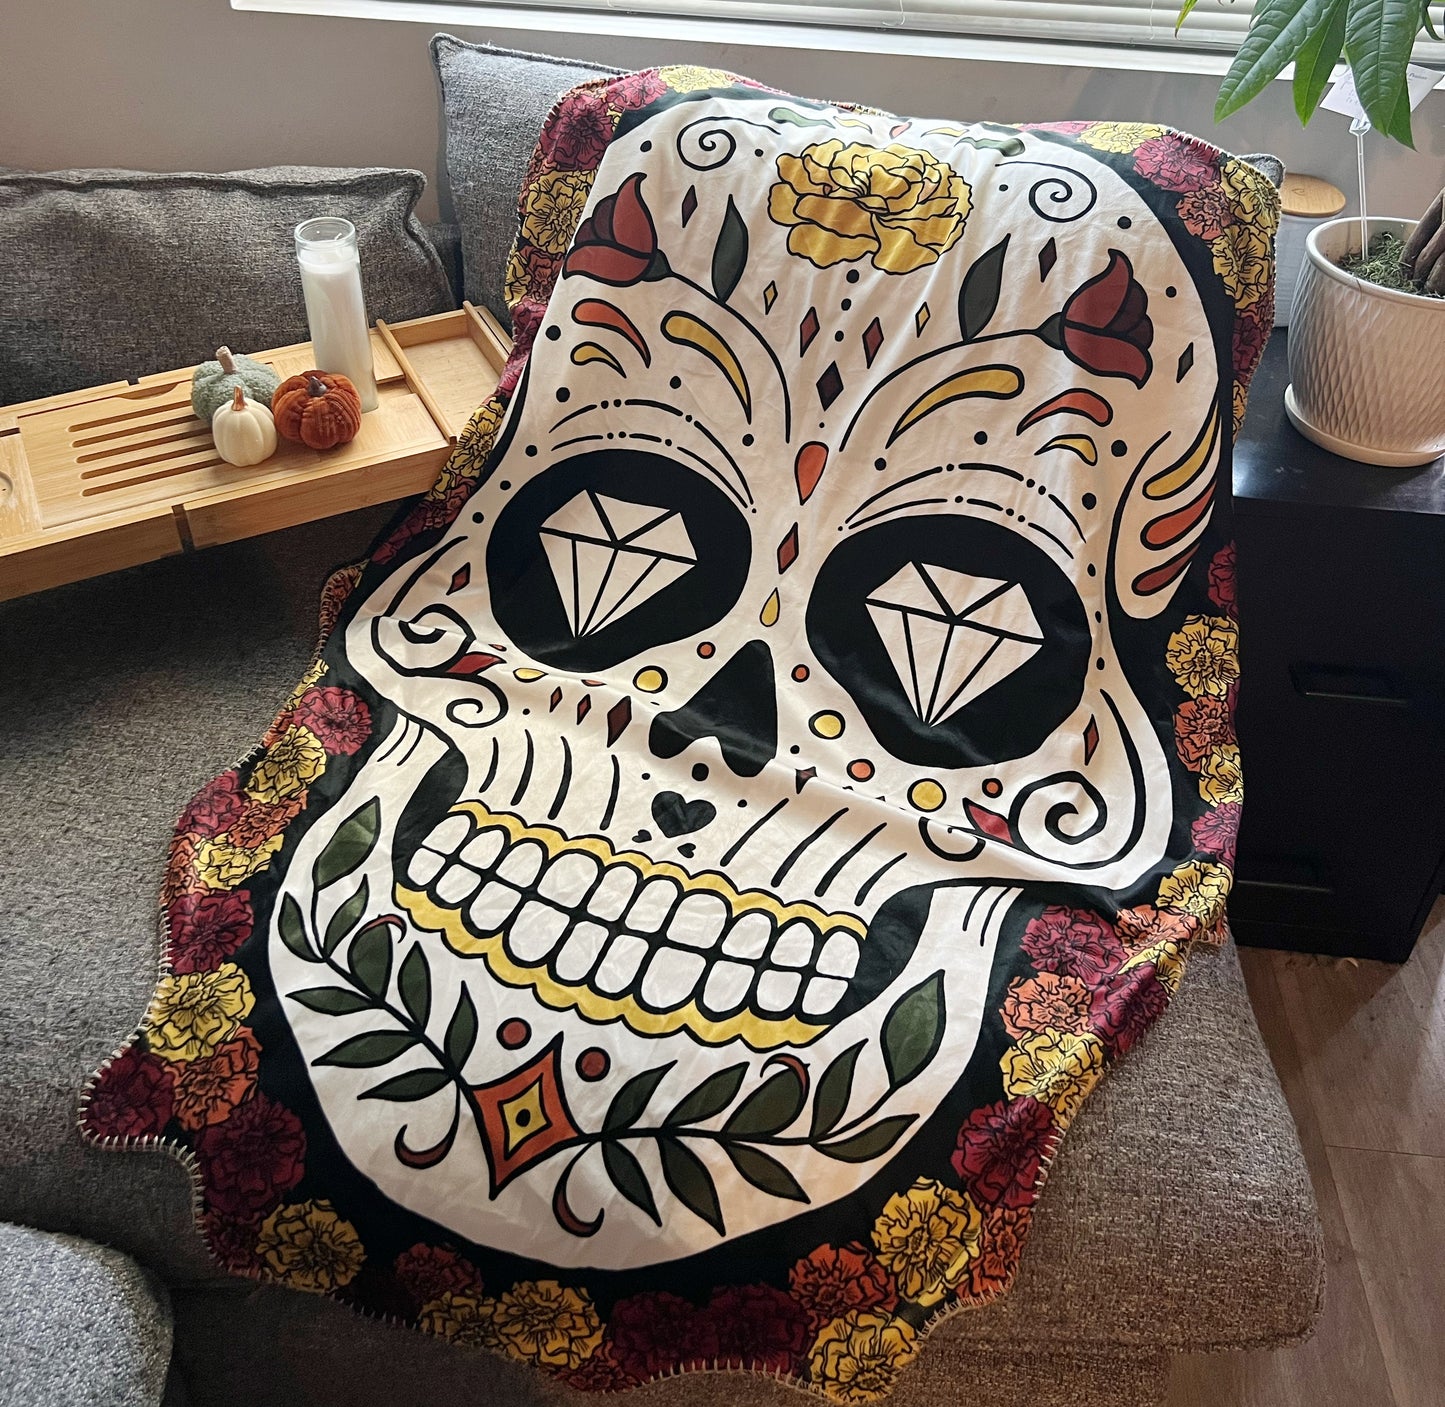 Freeform Blanket (Sugar skull in a bed of Marigolds)